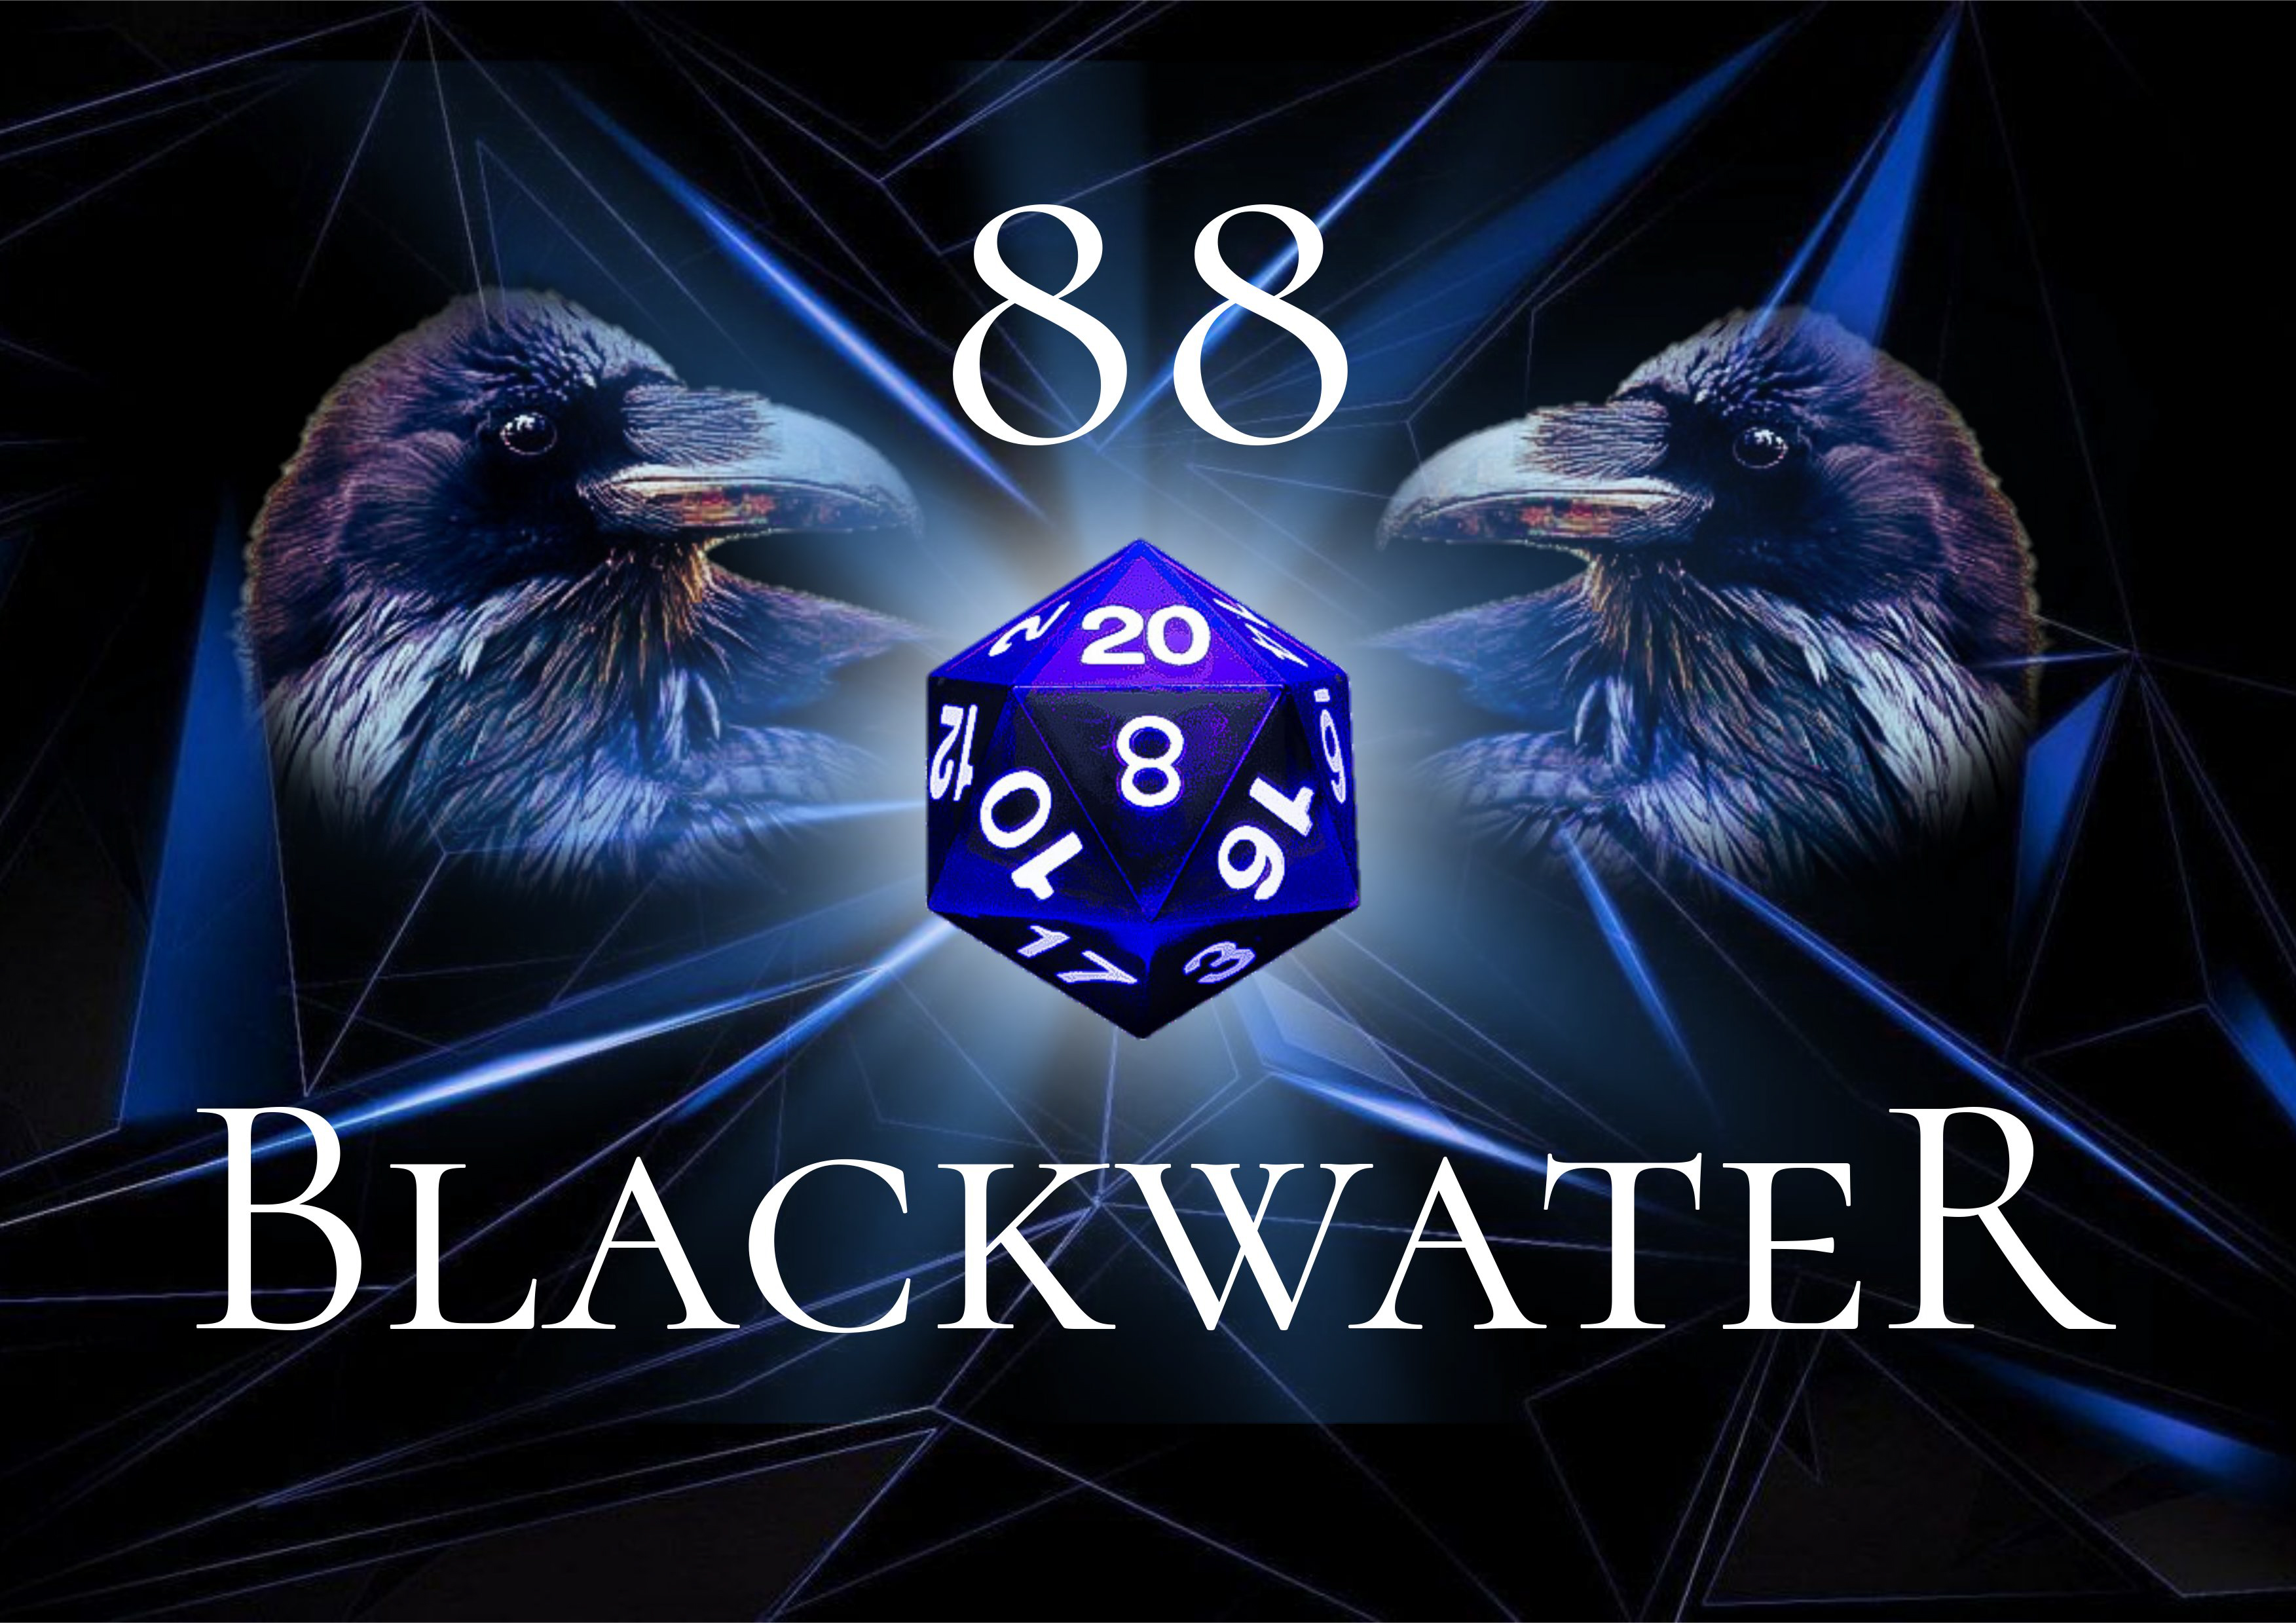 Blackwater 88